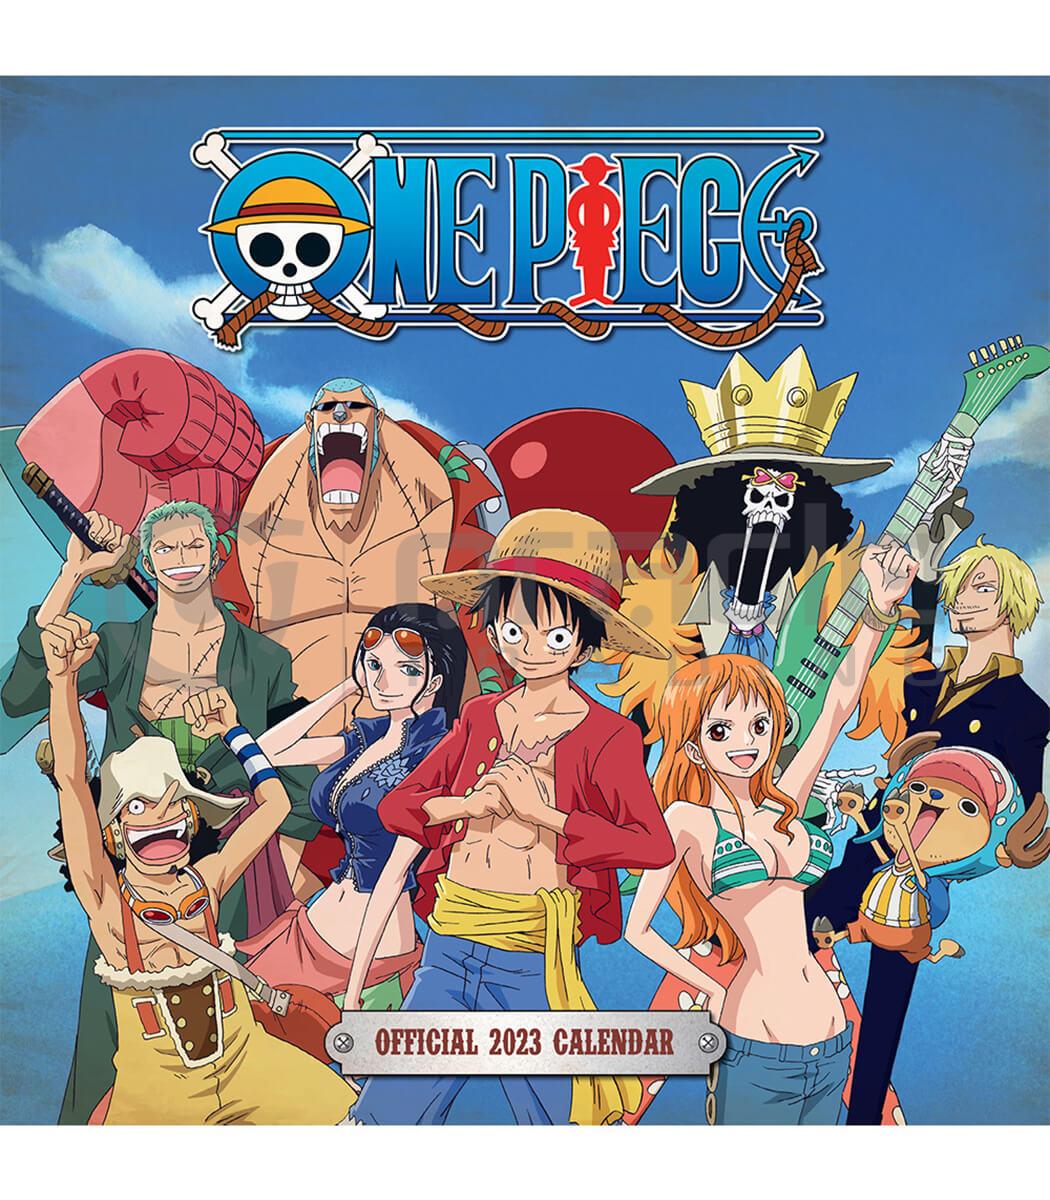 One Piece - : One Piece - Calendrier 2024